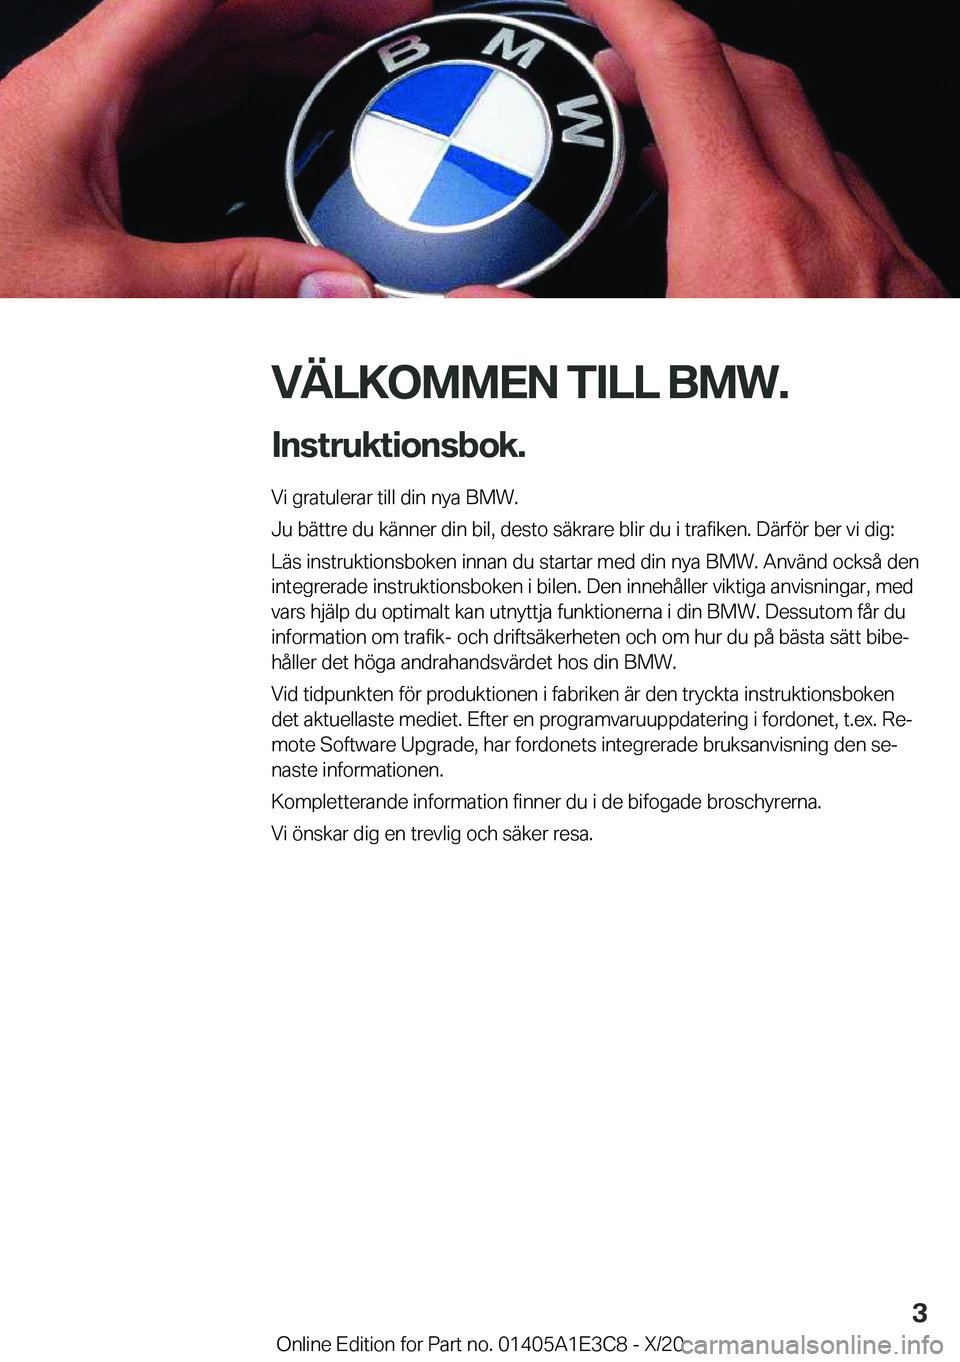 BMW M4 2021  InstruktionsbÖcker (in Swedish) �V�Ä�L�K�O�M�M�E�N��T�I�L�L��B�M�W�.�I�n�s�t�r�u�k�t�i�o�n�s�b�o�k�.
�V�i��g�r�a�t�u�l�e�r�a�r��t�i�l�l��d�i�n��n�y�a��B�M�W�.
�J�u��b�ä�t�t�r�e��d�u��k�ä�n�n�e�r��d�i�n��b�i�l�,��d�e�